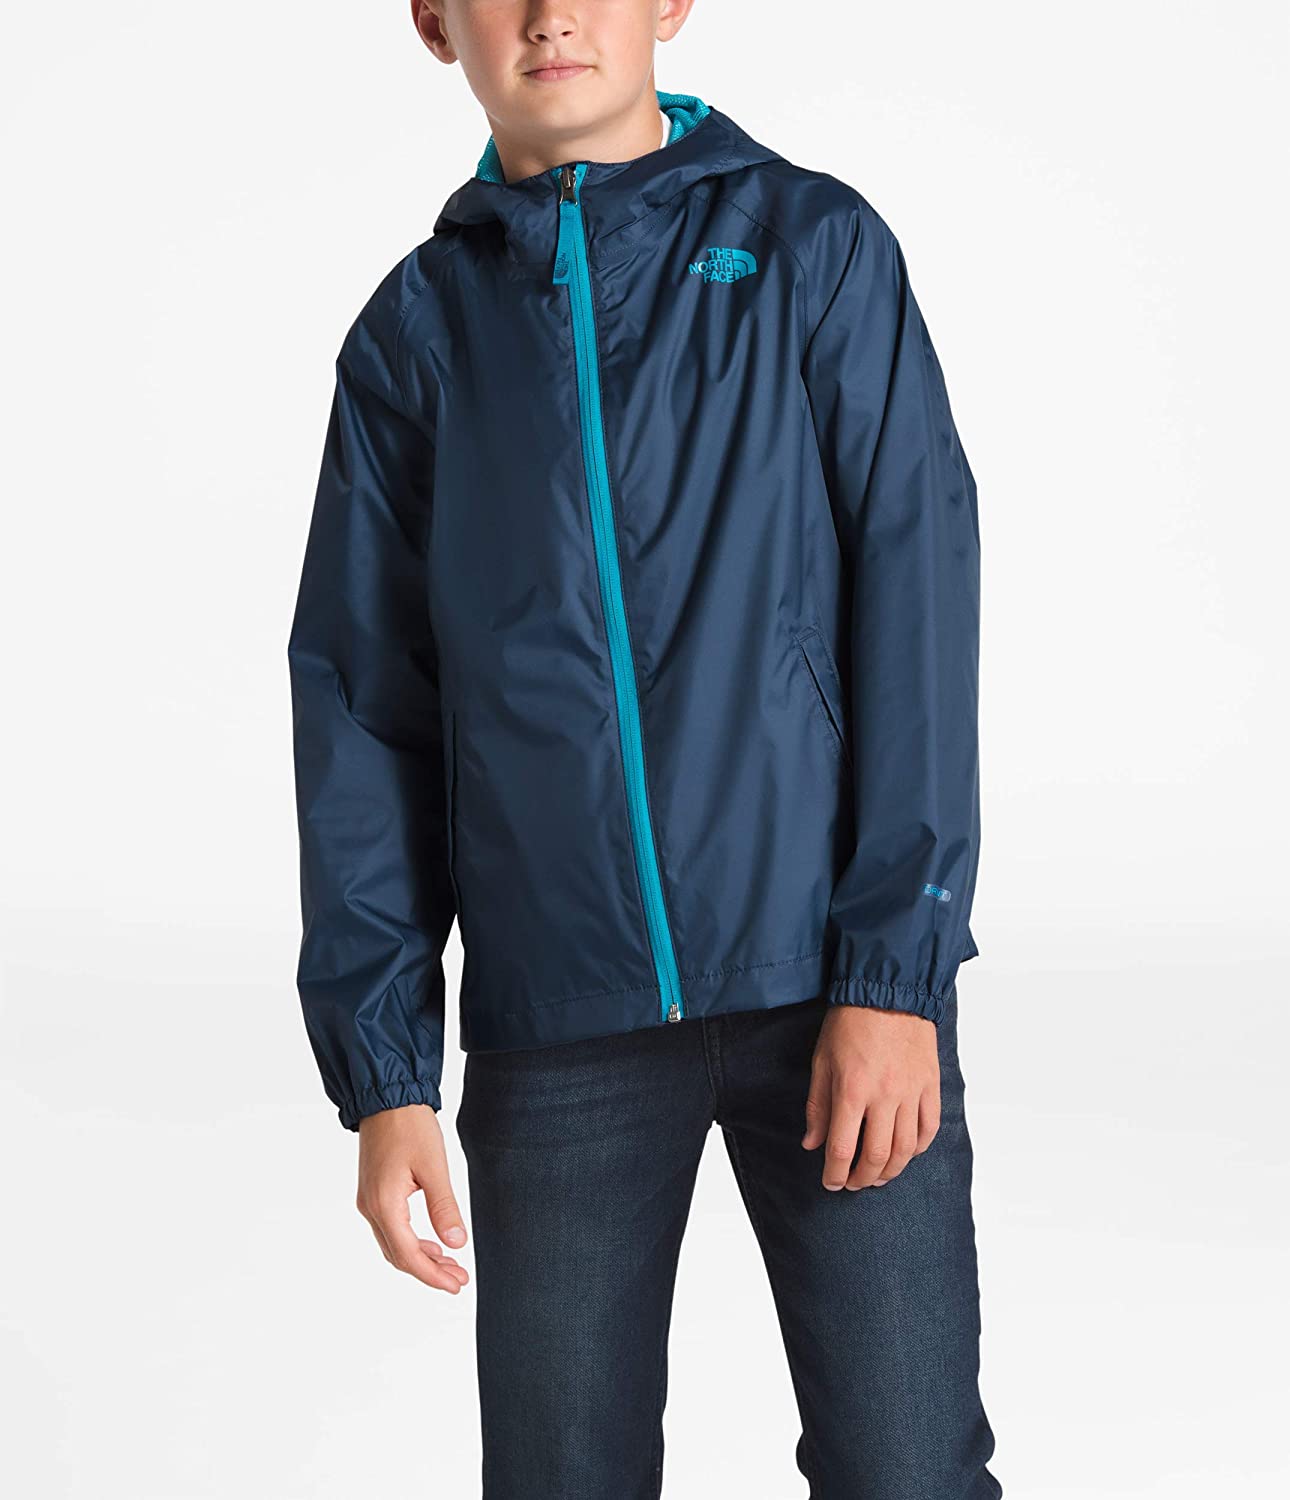 The North Face Zipline Rain jacket